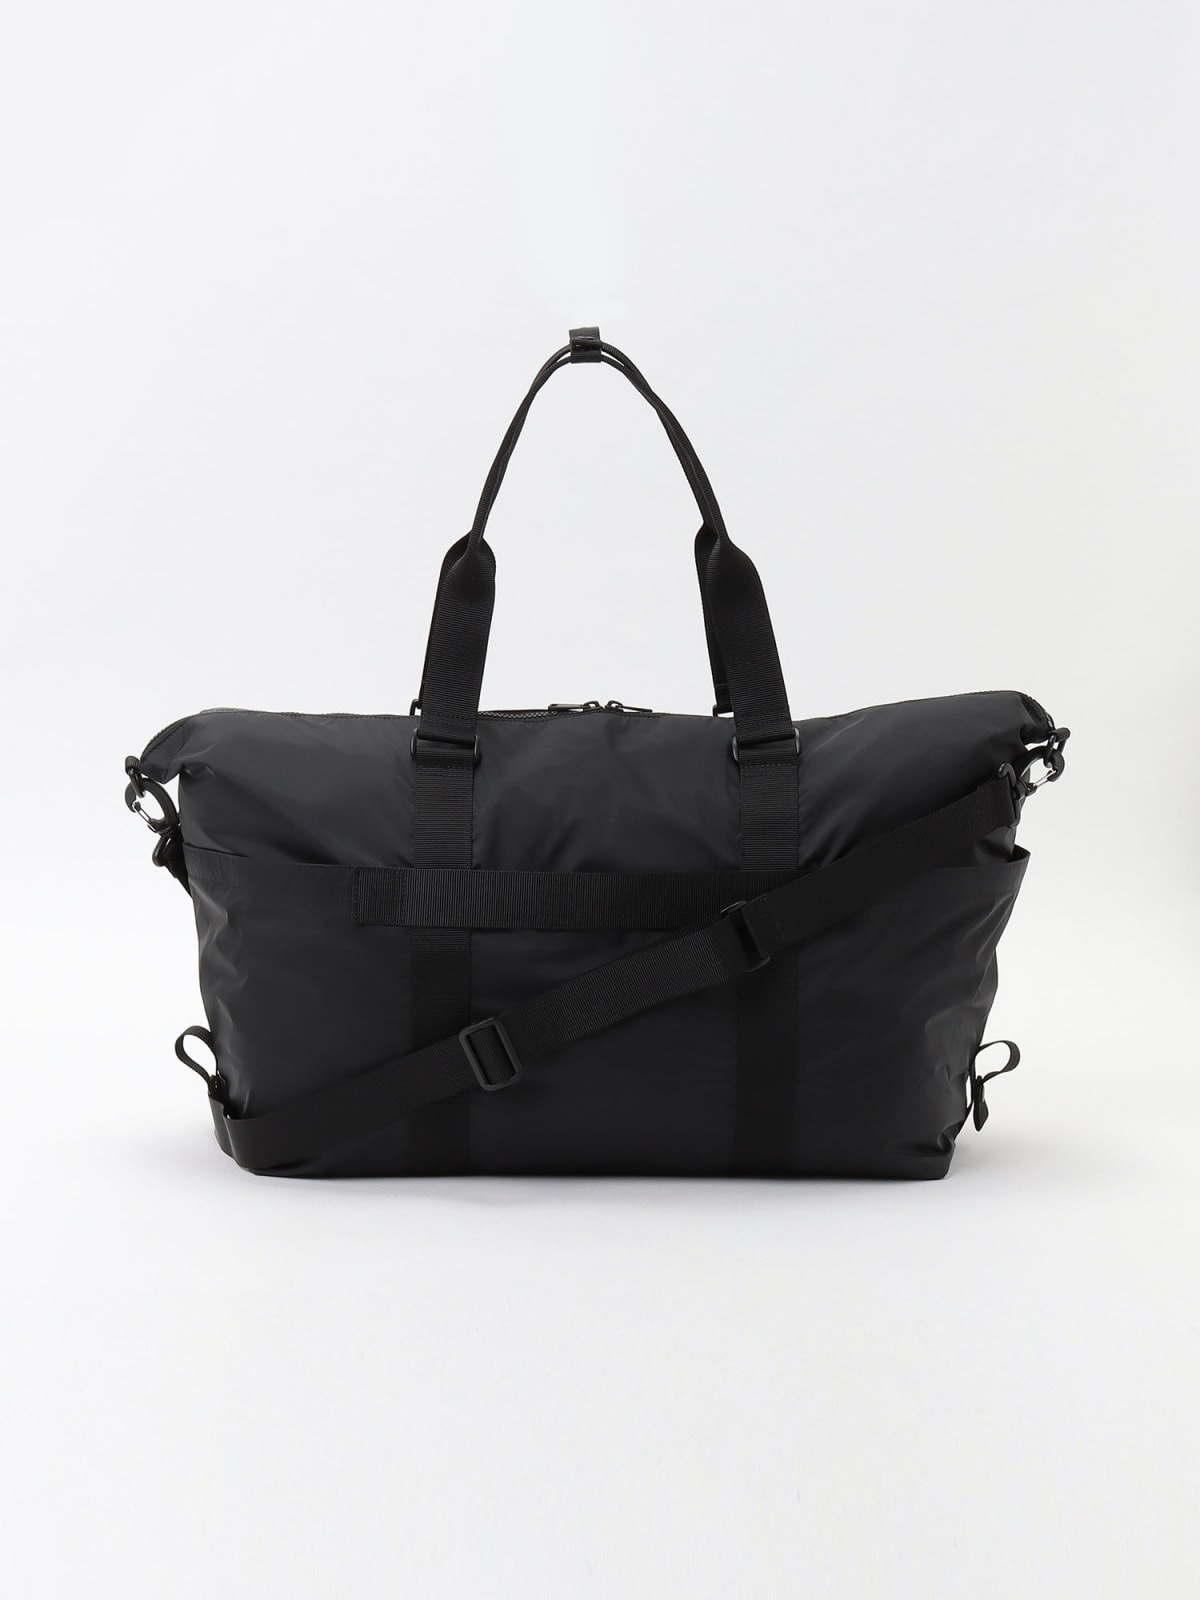 black nylon shopping bag with pockets